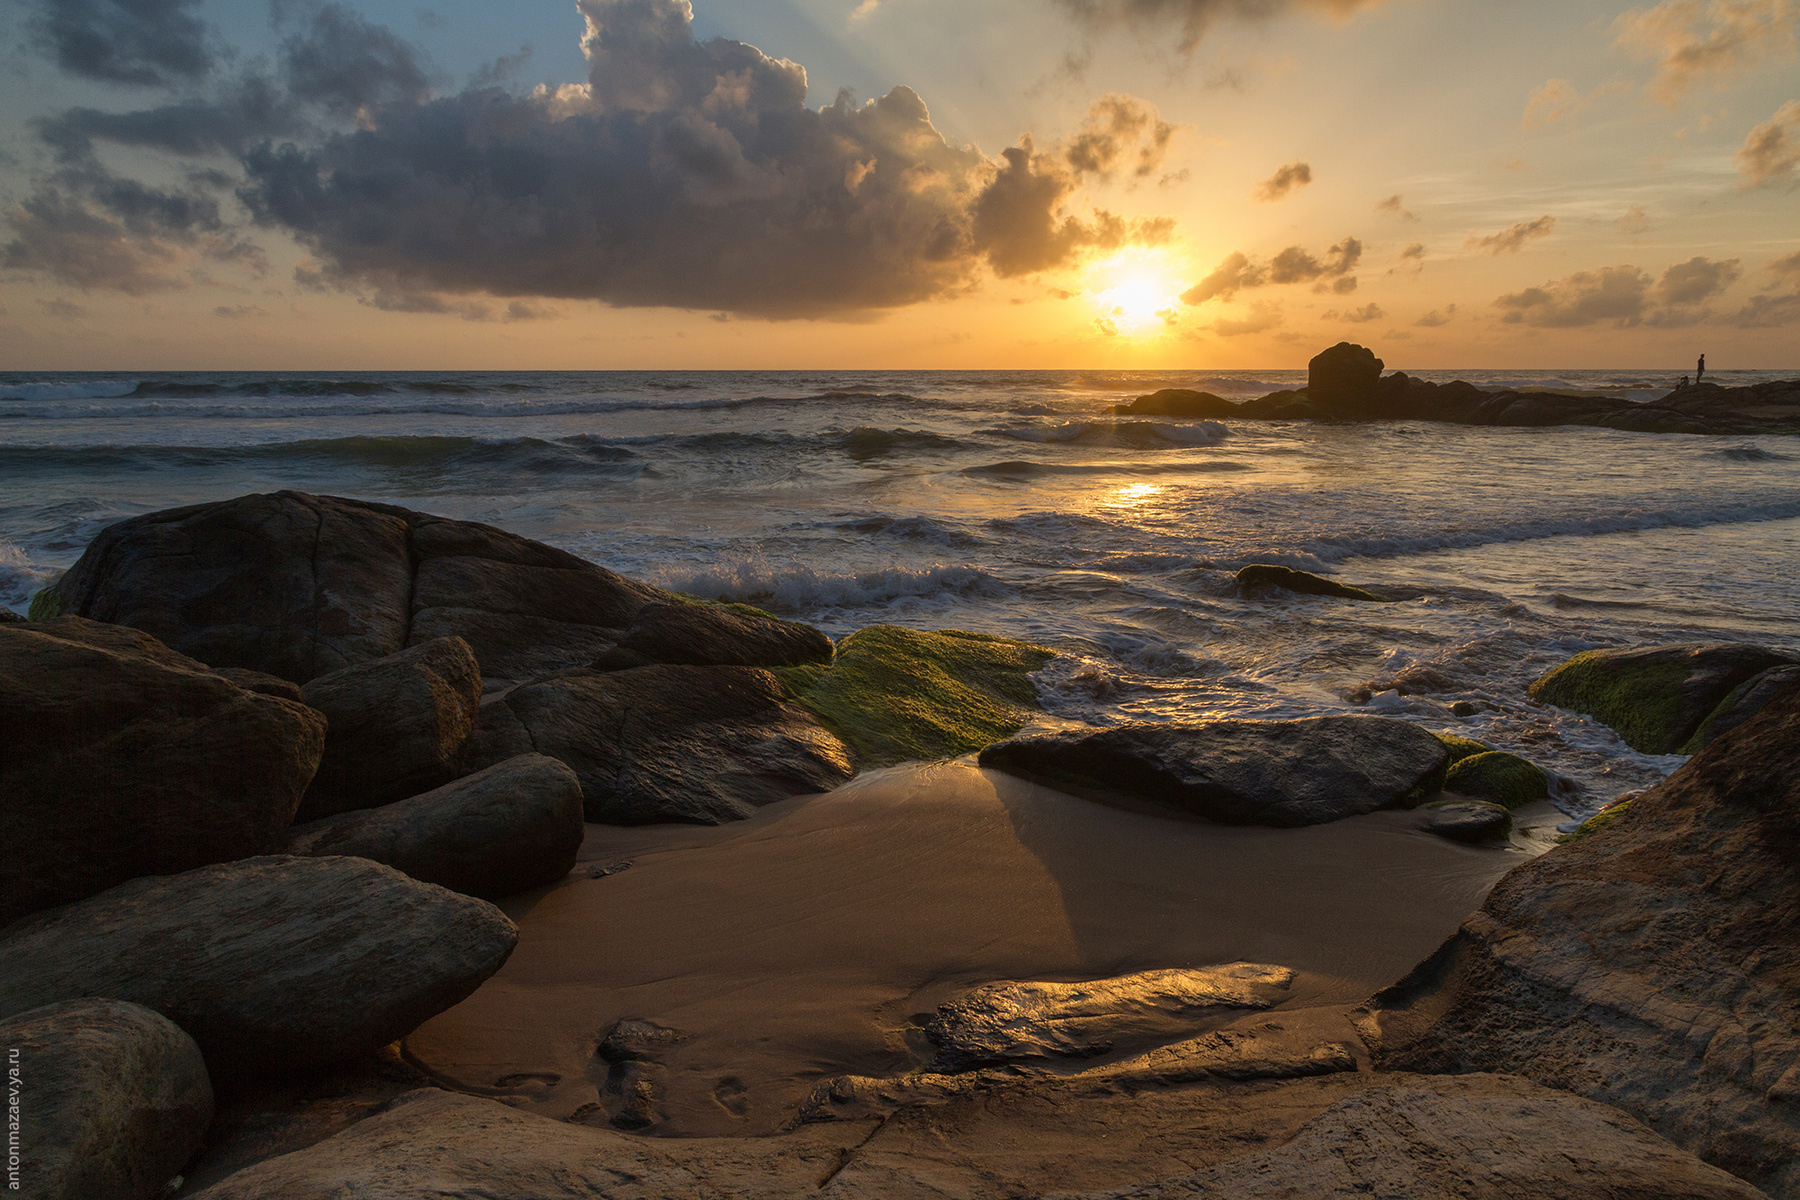 Sunset stones antonmazaev bentota sri lanka антон мазаев бентота вечер закат камни океан пейзаж пляж прибой природа путешествия туризм цейлон шри-ланка